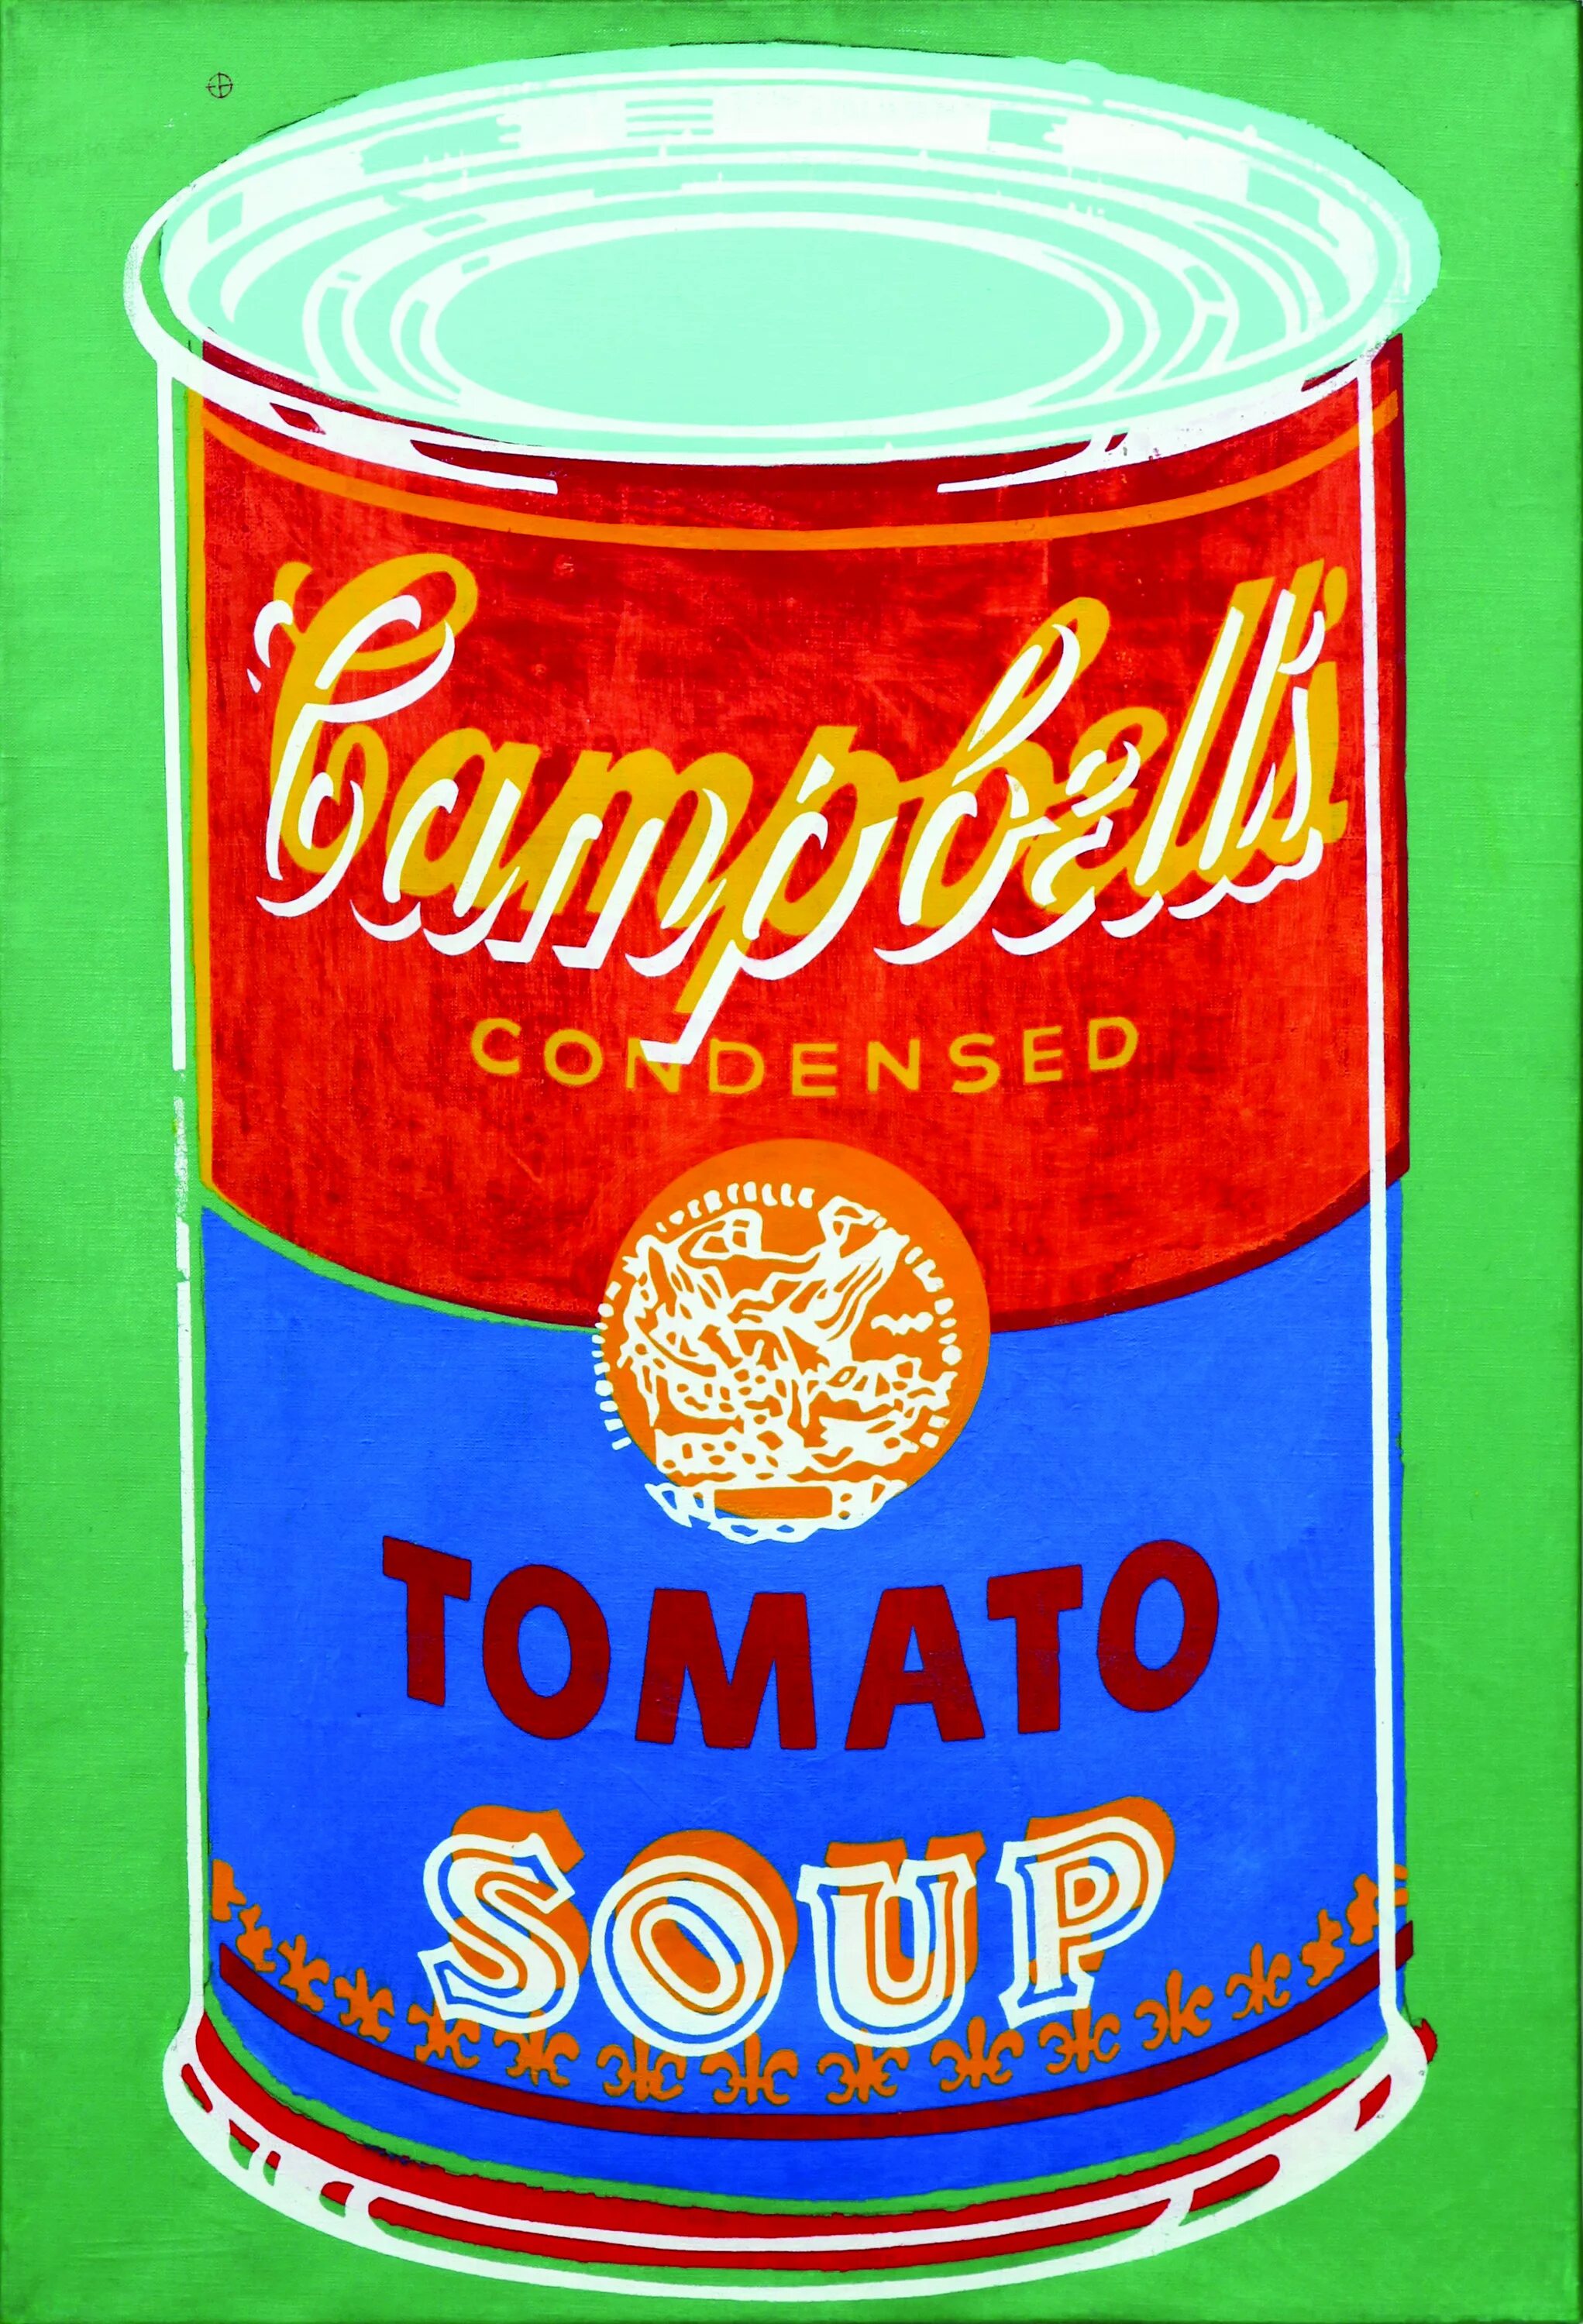 Soup cans. Банки с супом Кэмпбелл Энди Уорхола. Энди Уорхол банки с супом Кэмпбелл 1962. Уорхол суп Кэмпбелл картина. Энди Уорхол томатный суп.